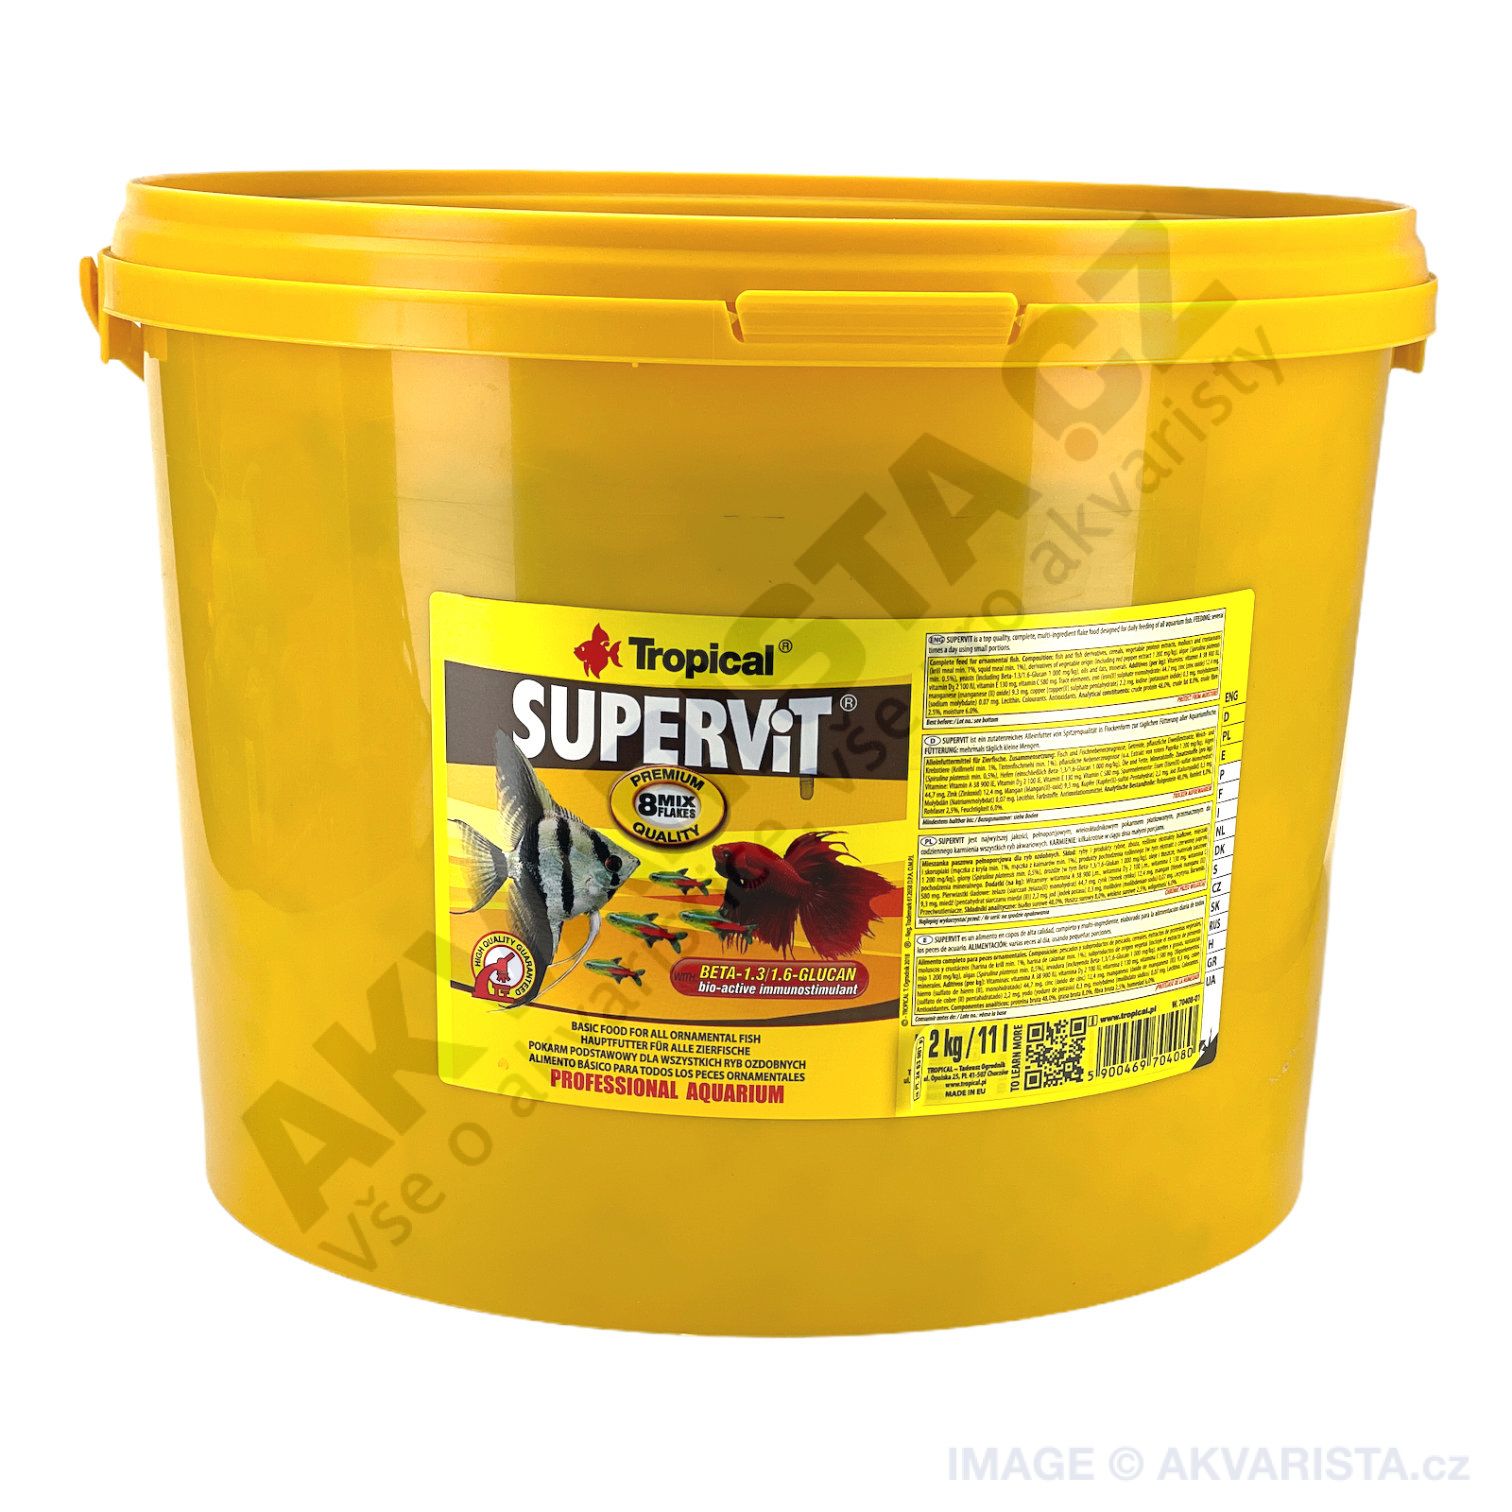 Tropical Supervit 11000 ml